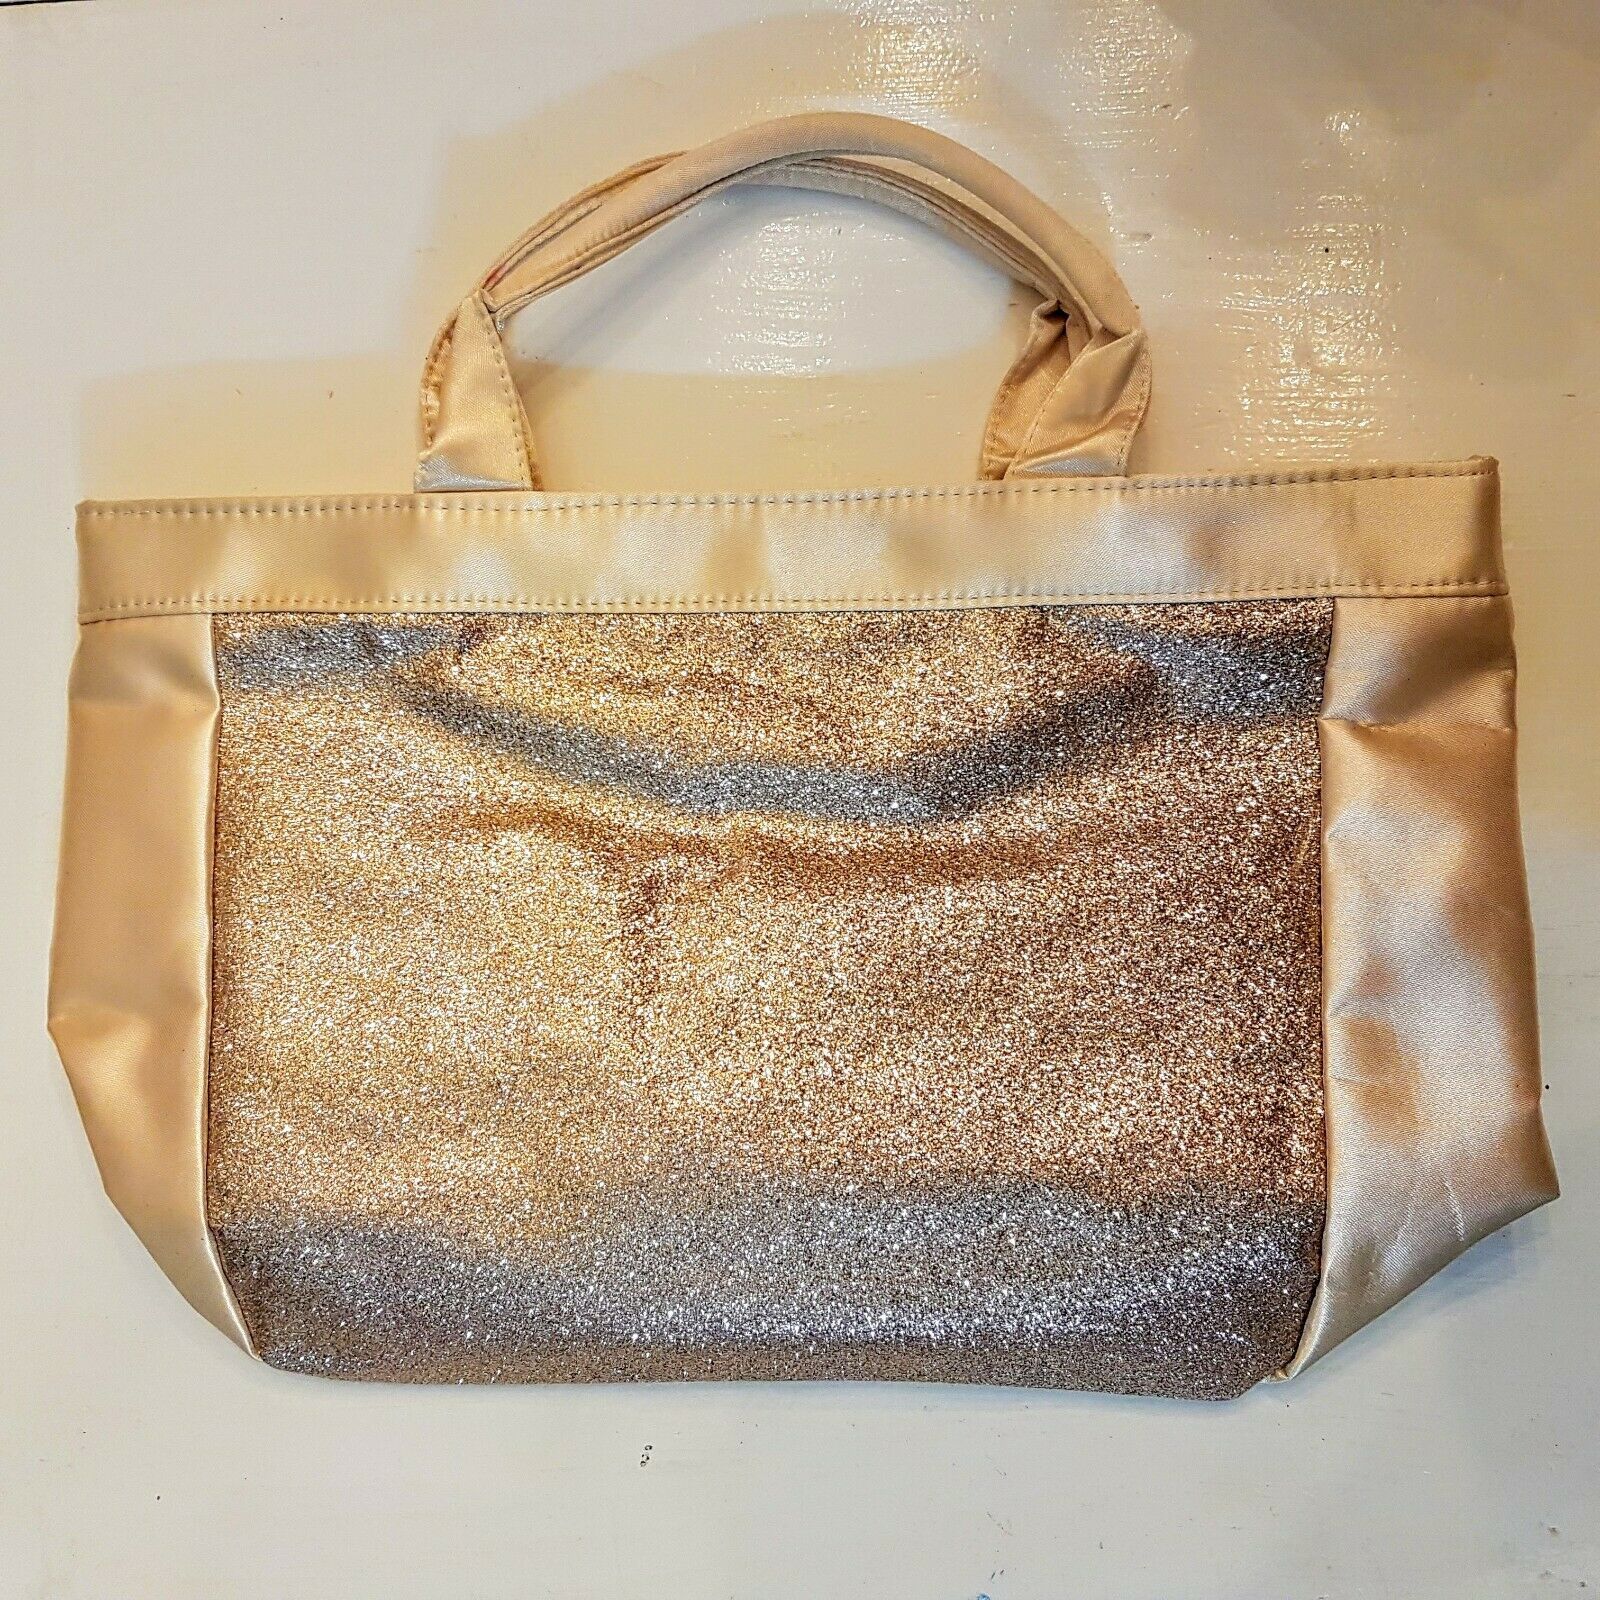 Avon All That Glitters Hand Bag Tote Metallic Gold Color Trim Shopper Purse New - $14.85